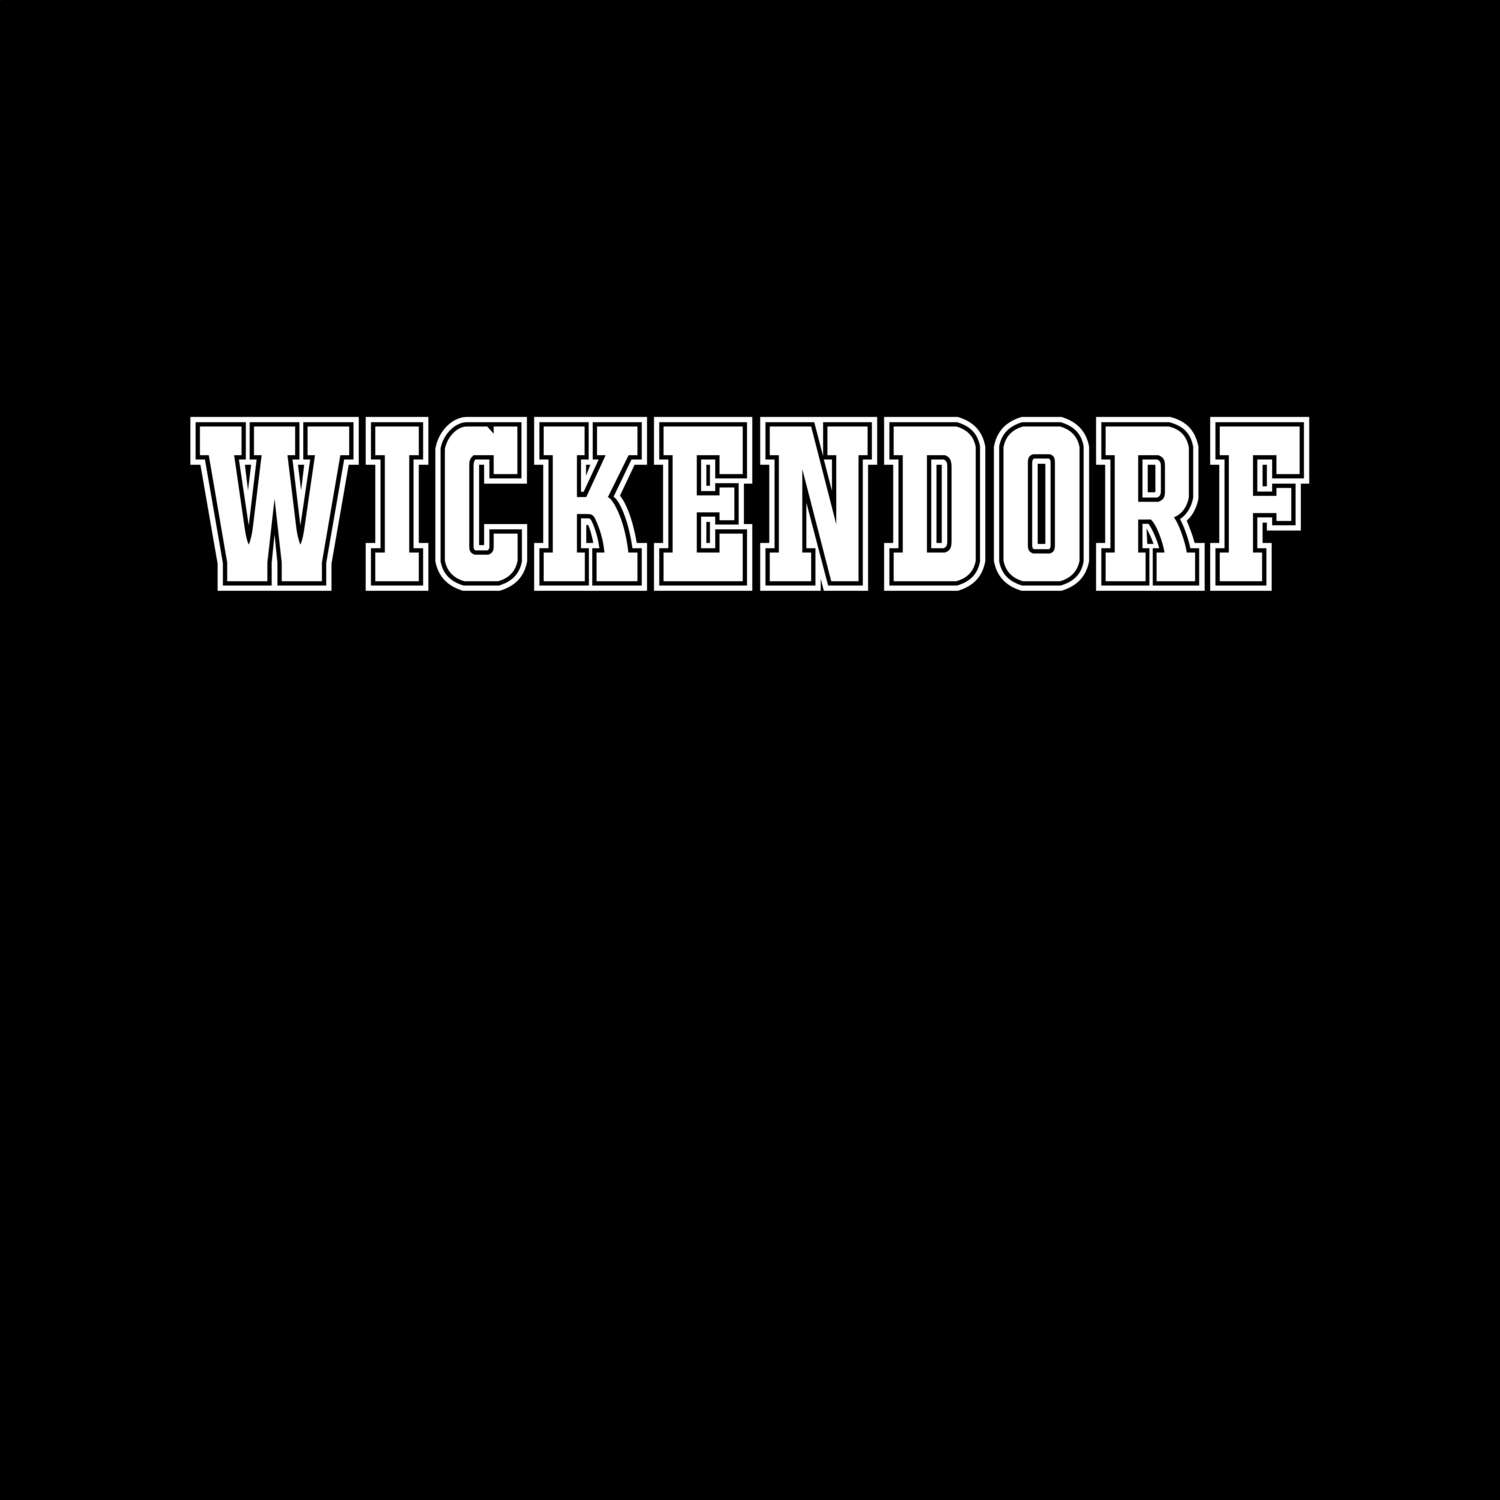 Wickendorf T-Shirt »Classic«